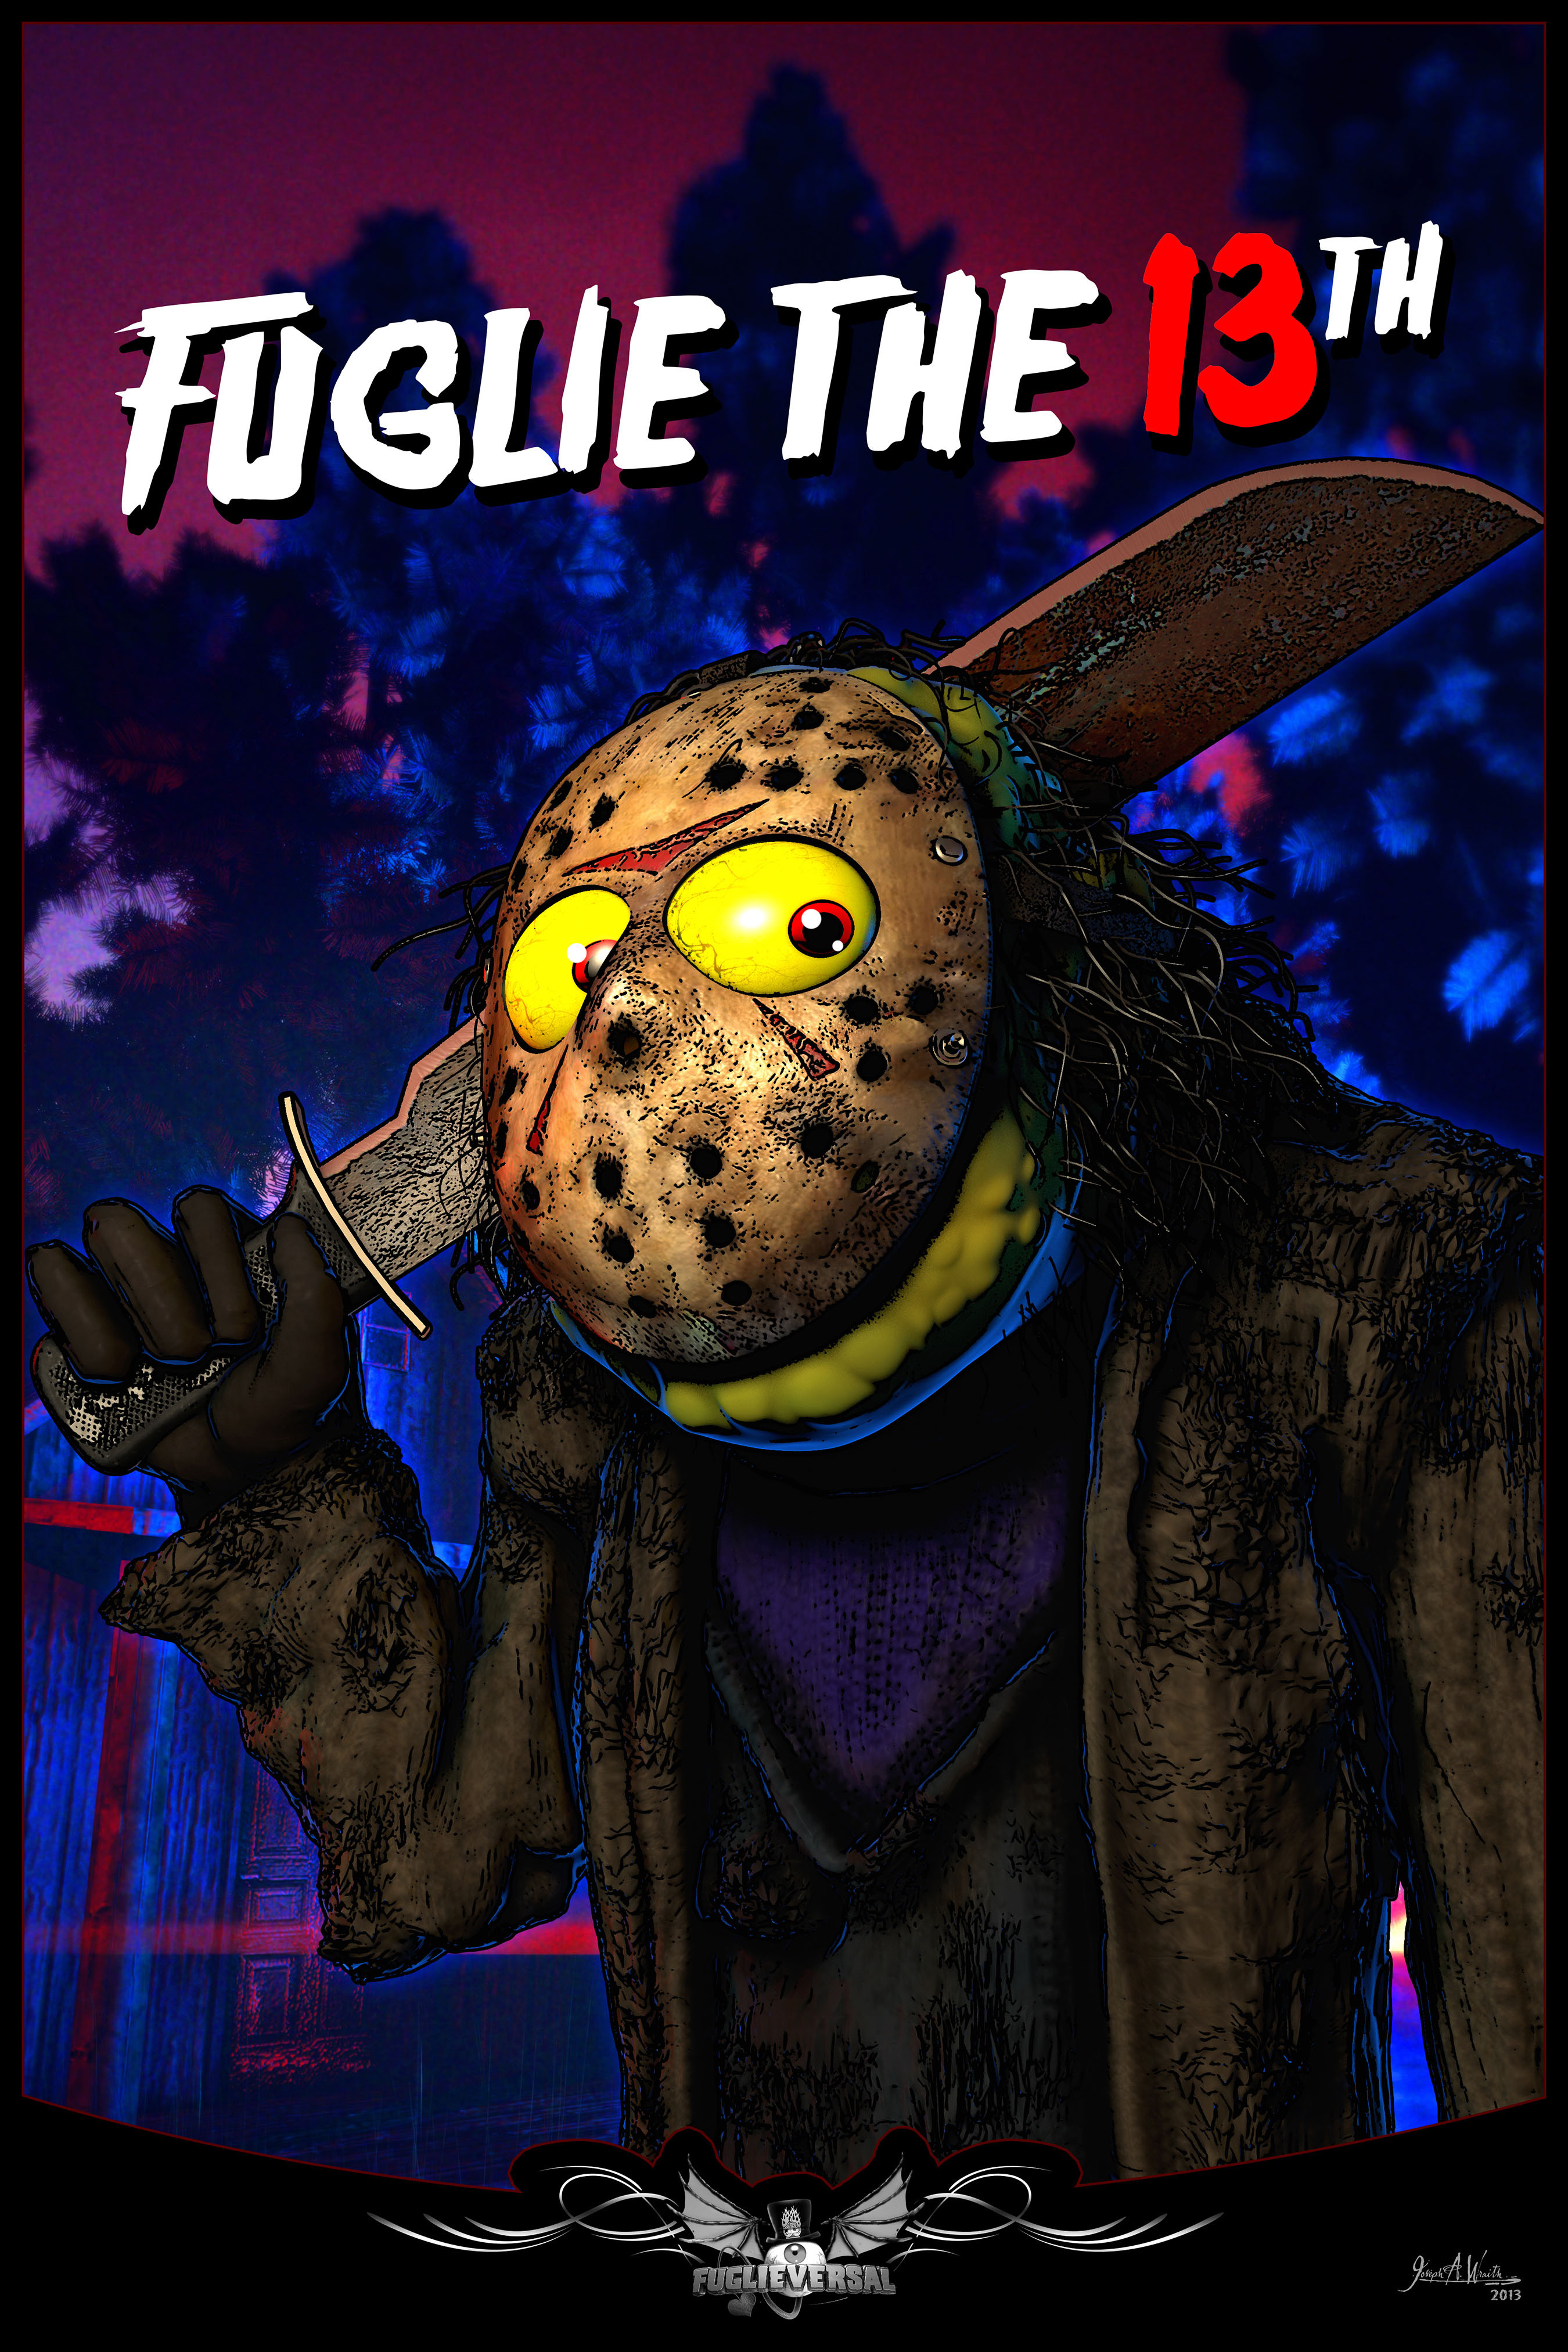 The Fuglies presents Fuglieversal Monsters: Fuglie the 13th
©2014 Copyright, Joseph A. Wraith